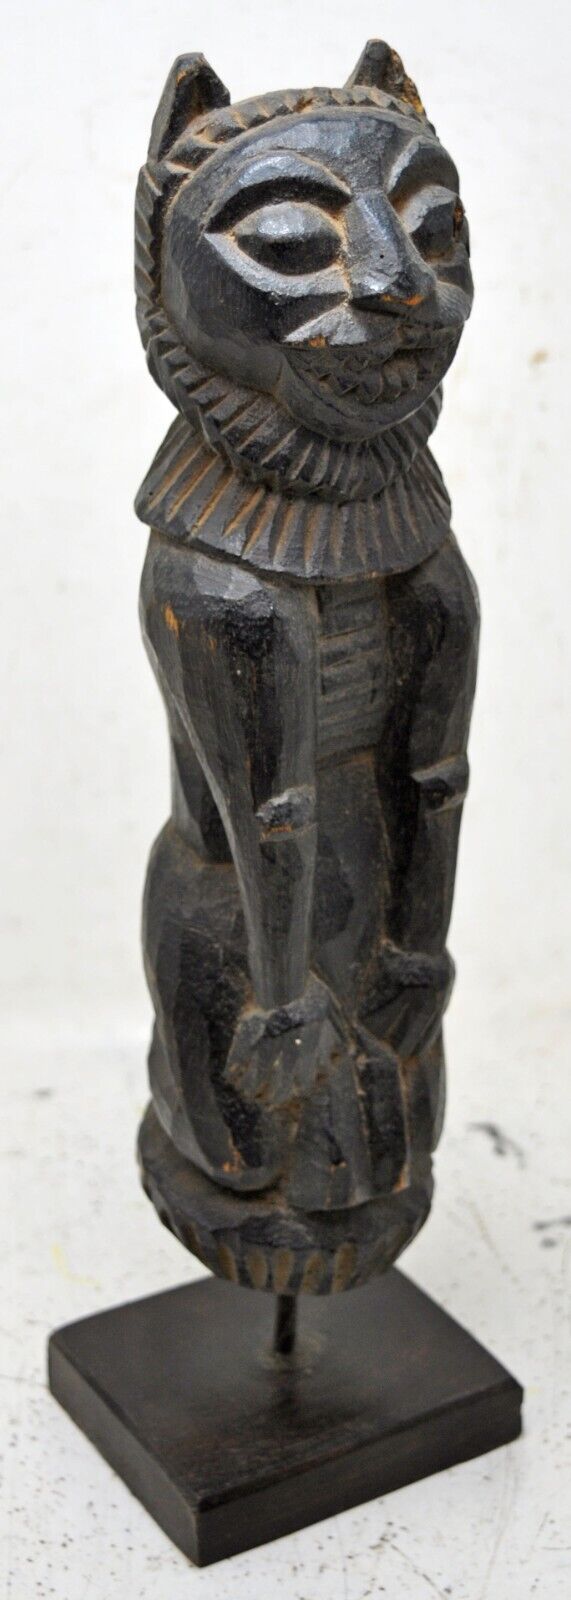 Antique Wooden Tribal Lion Figurine Original Old Very Fine Hand Carved